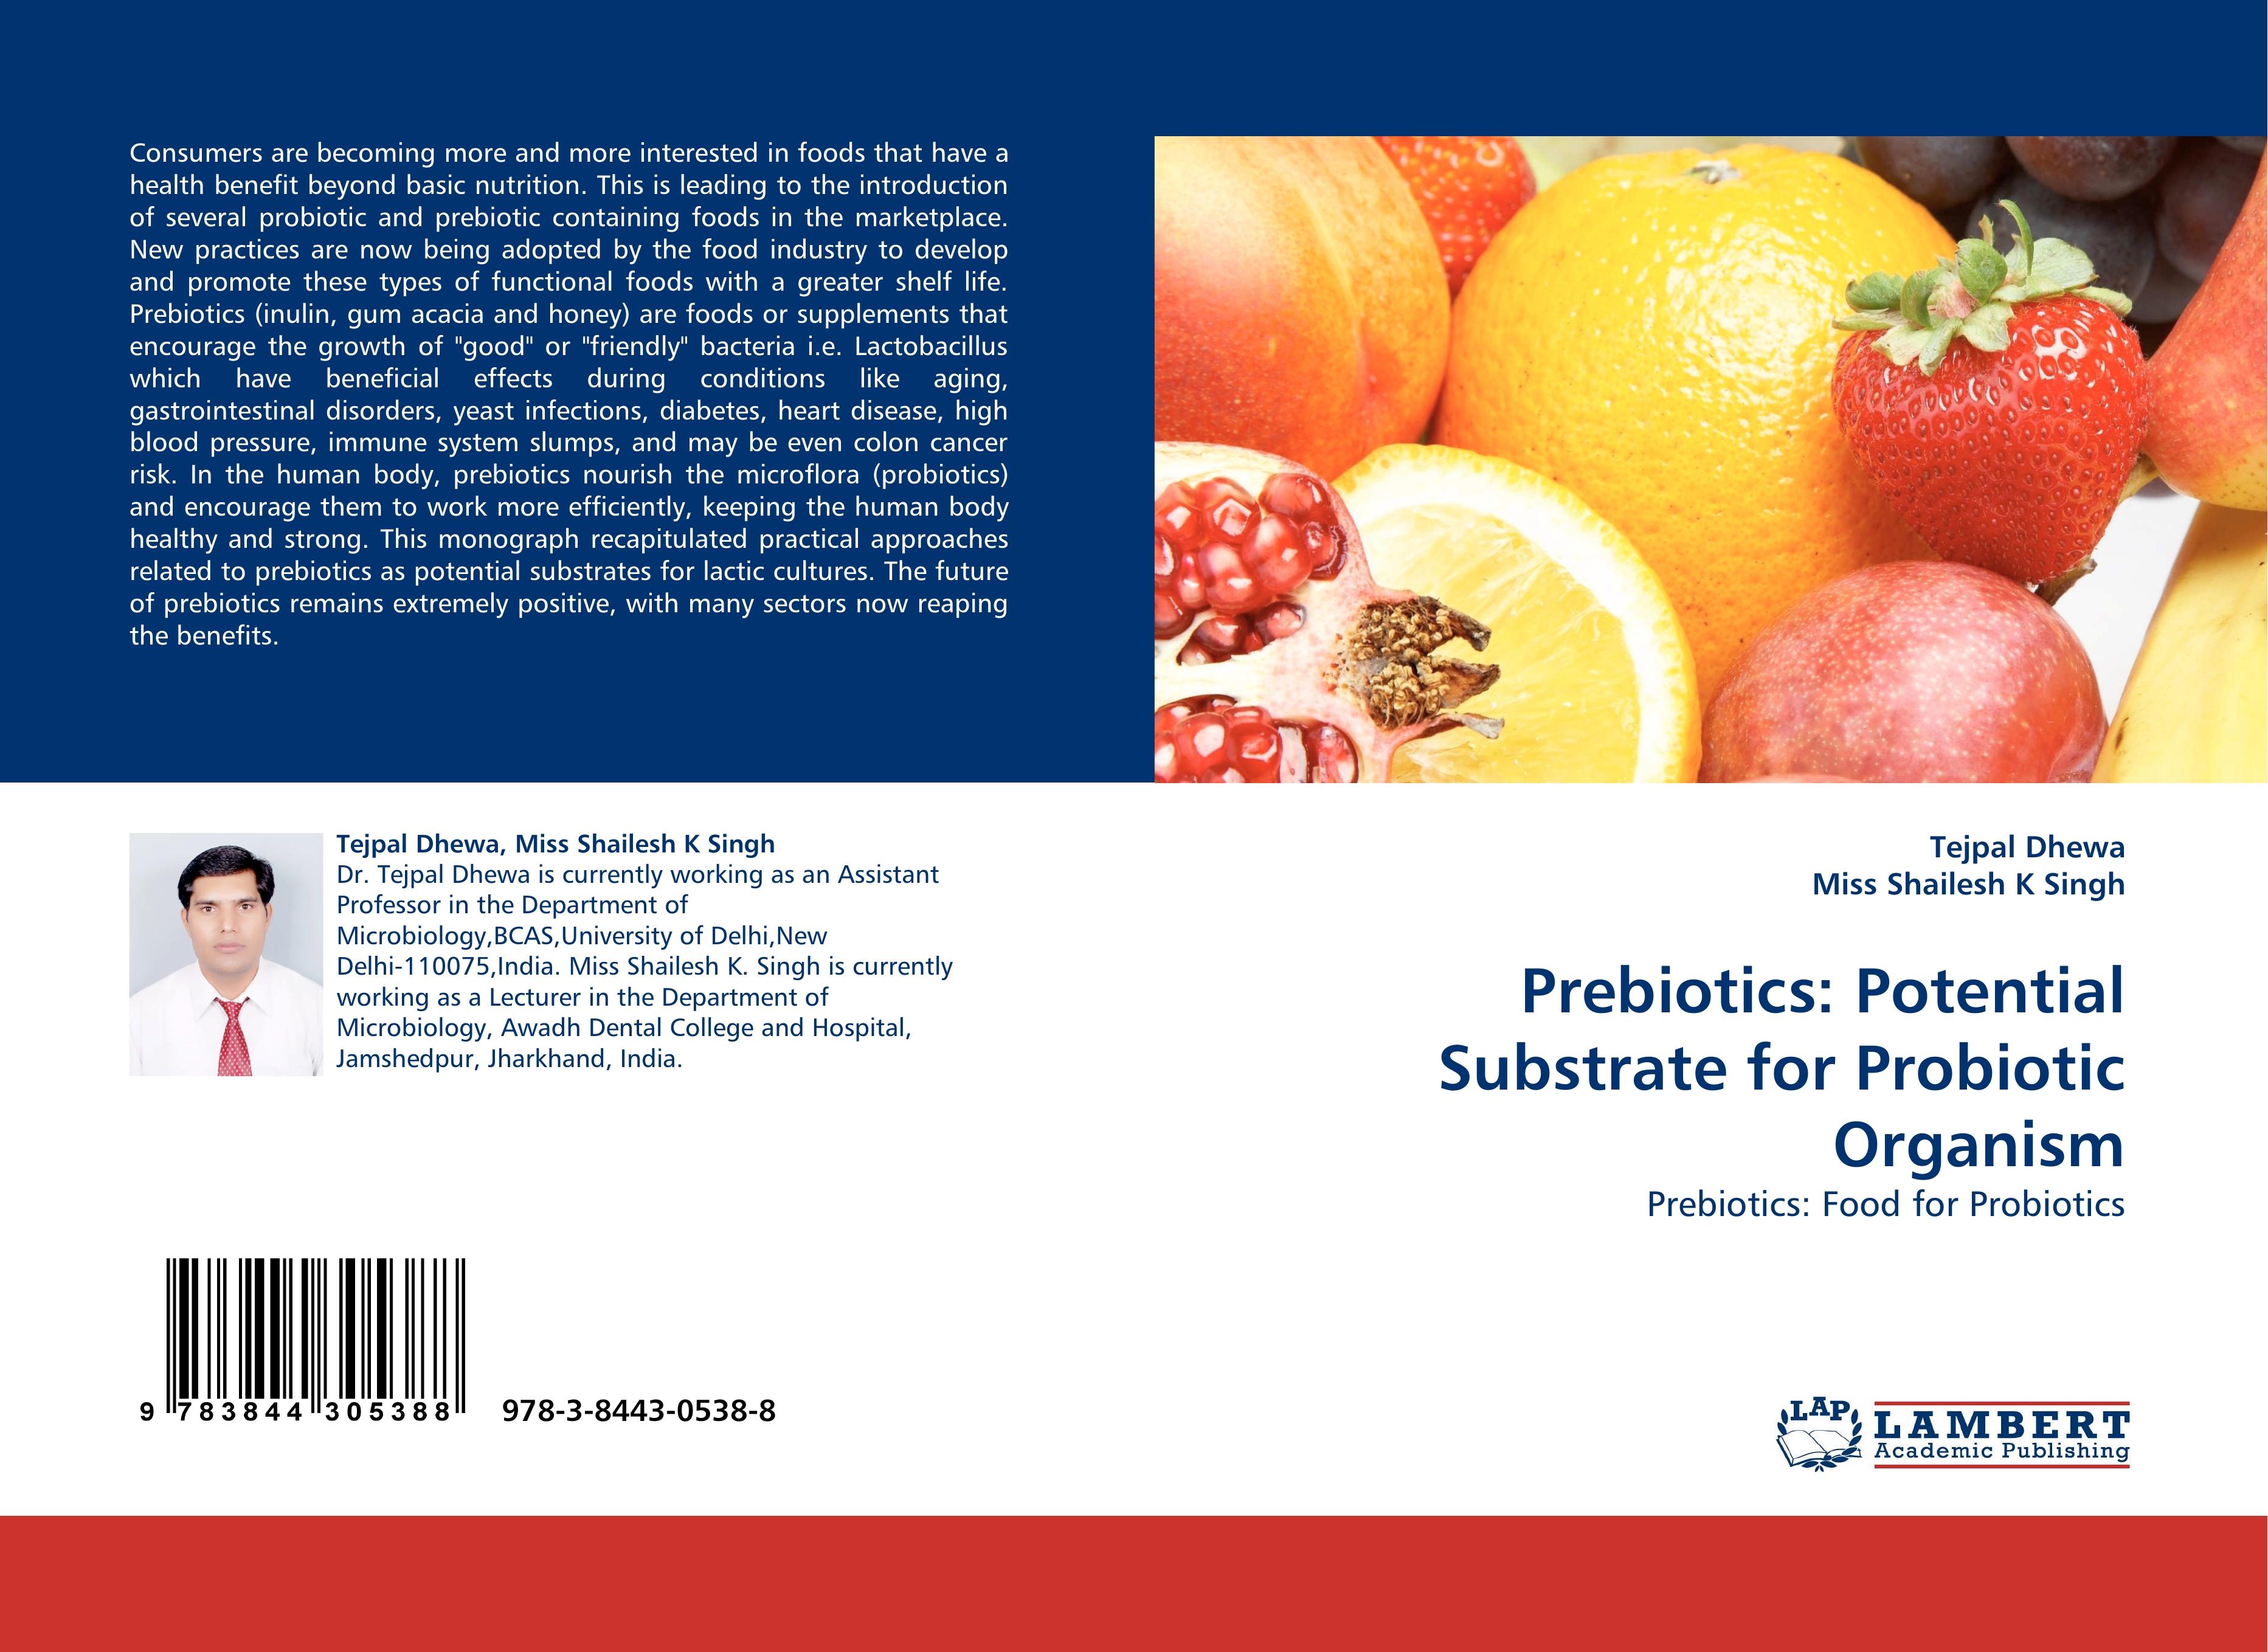 Prebiotics: Potential Substrate for Probiotic Organism - Tejpal Dhewa|Miss Shailesh K Singh